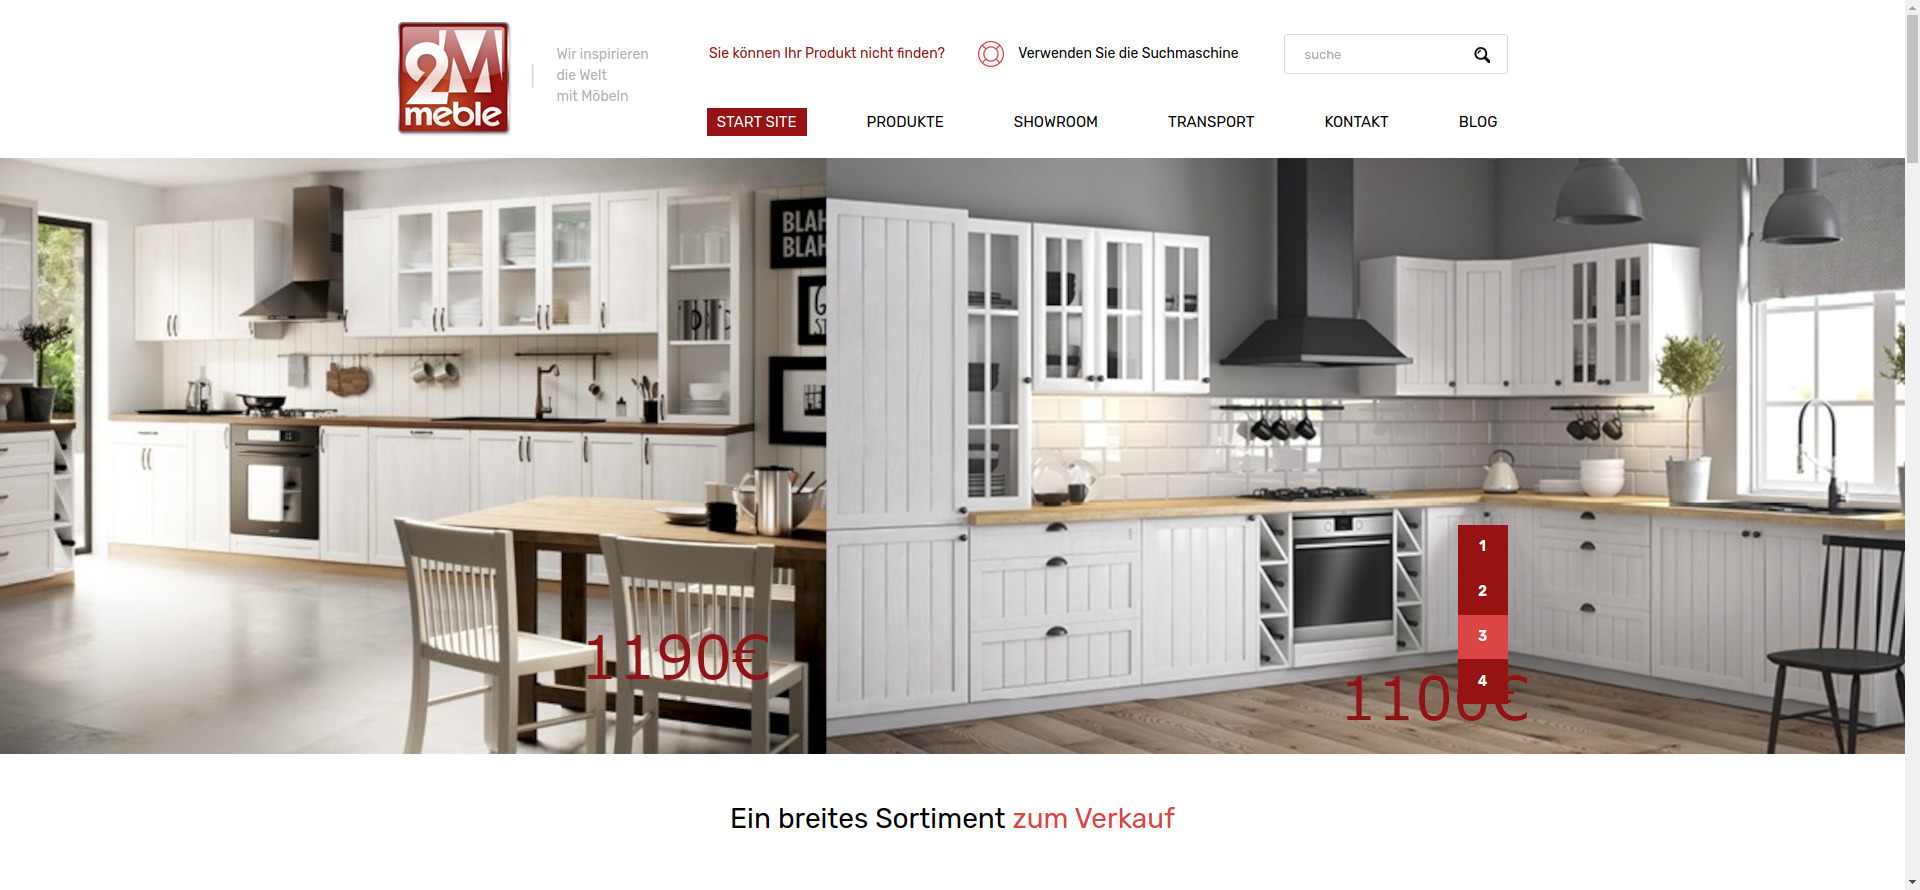 Moebel2m küchen Berlin Preis